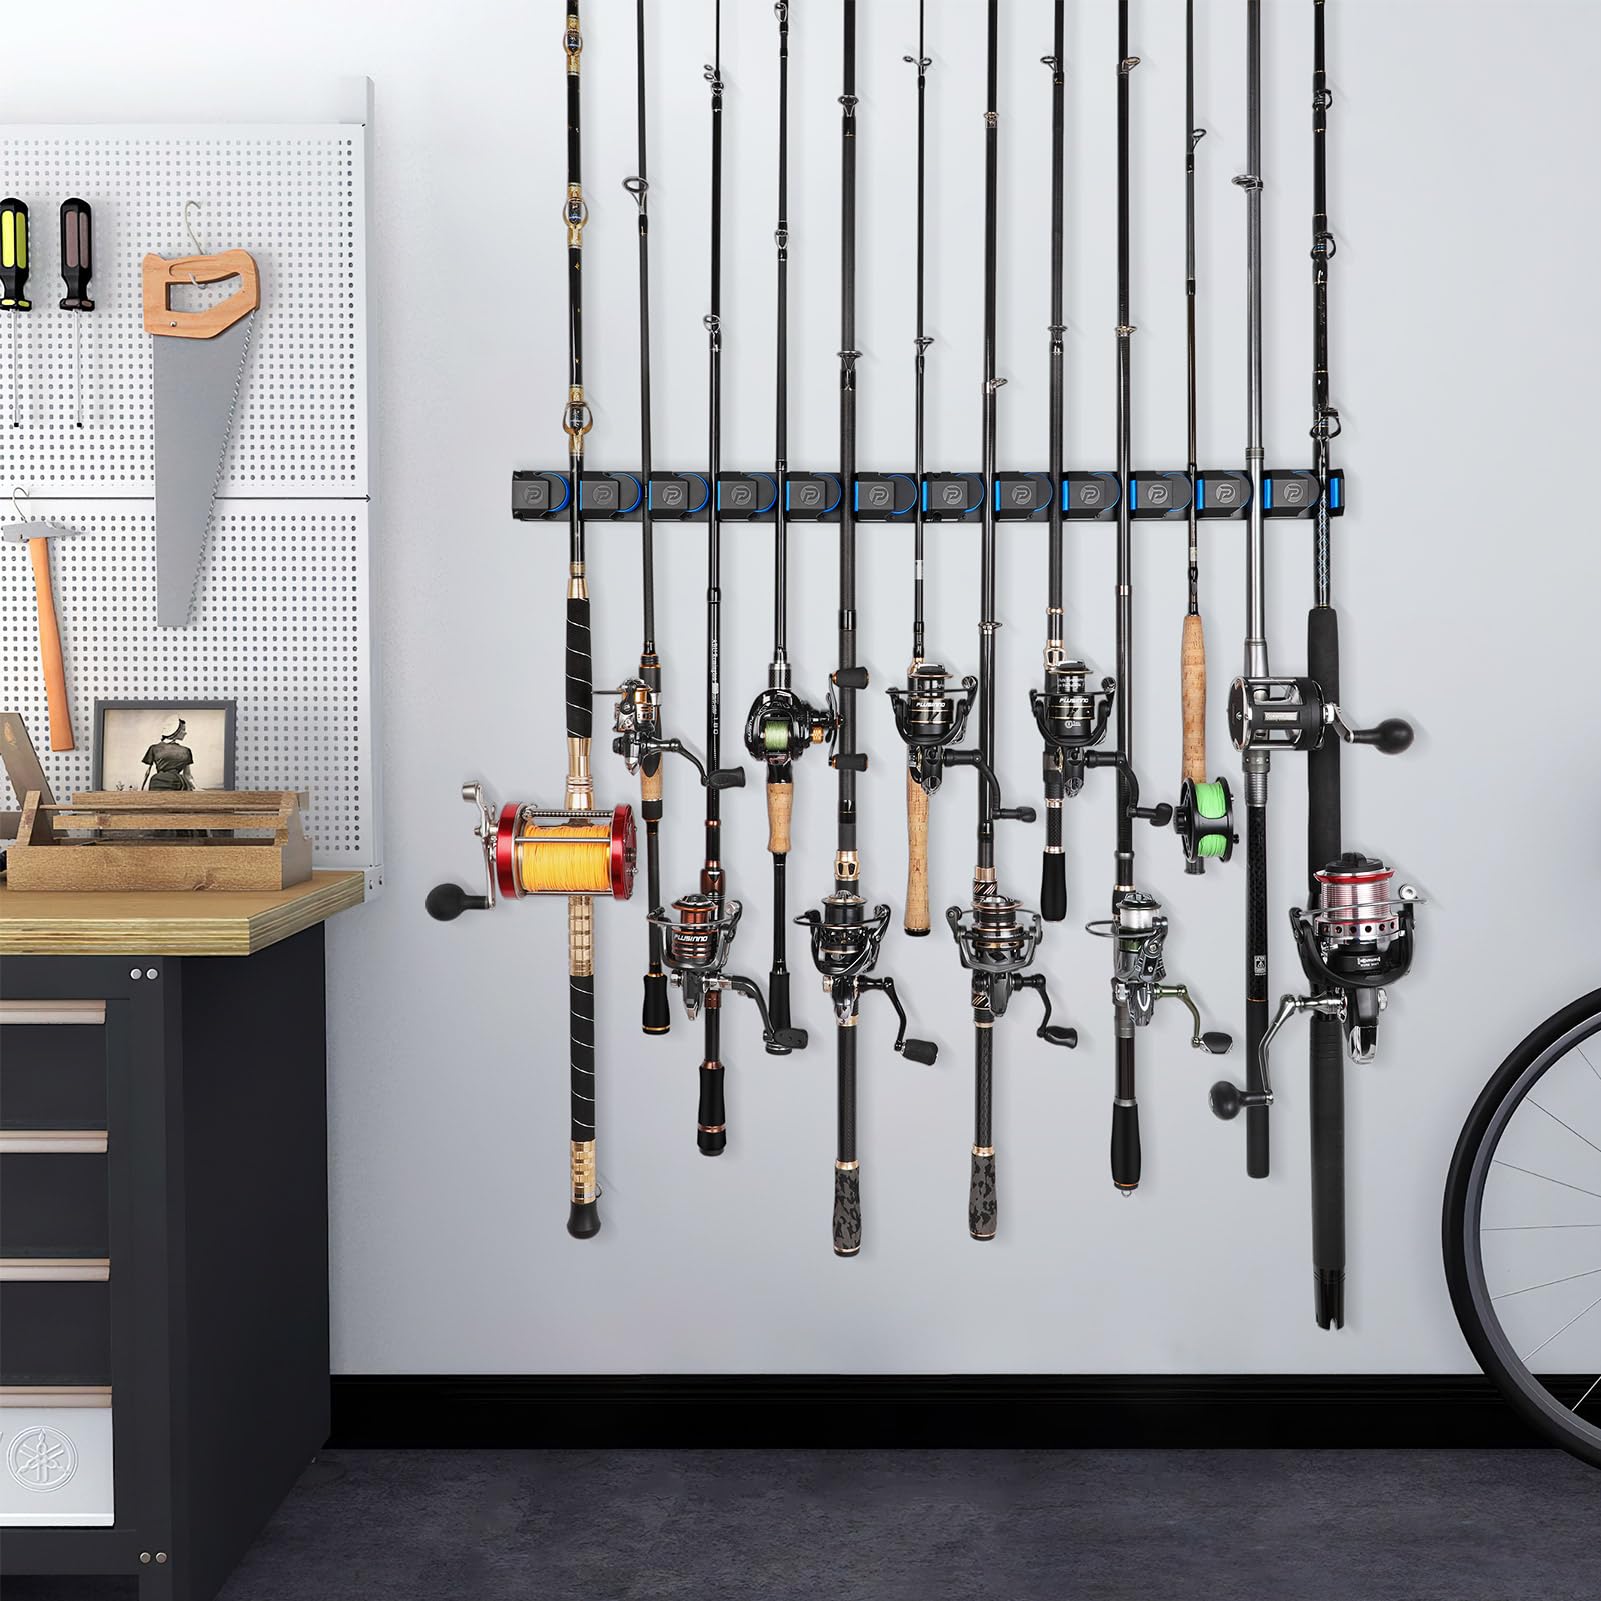 Calamus Horizontal/Vertical Fishing Rod Holder - Wall Mounted Fishing Rod  Rack, Store 6 Rods or Fishing